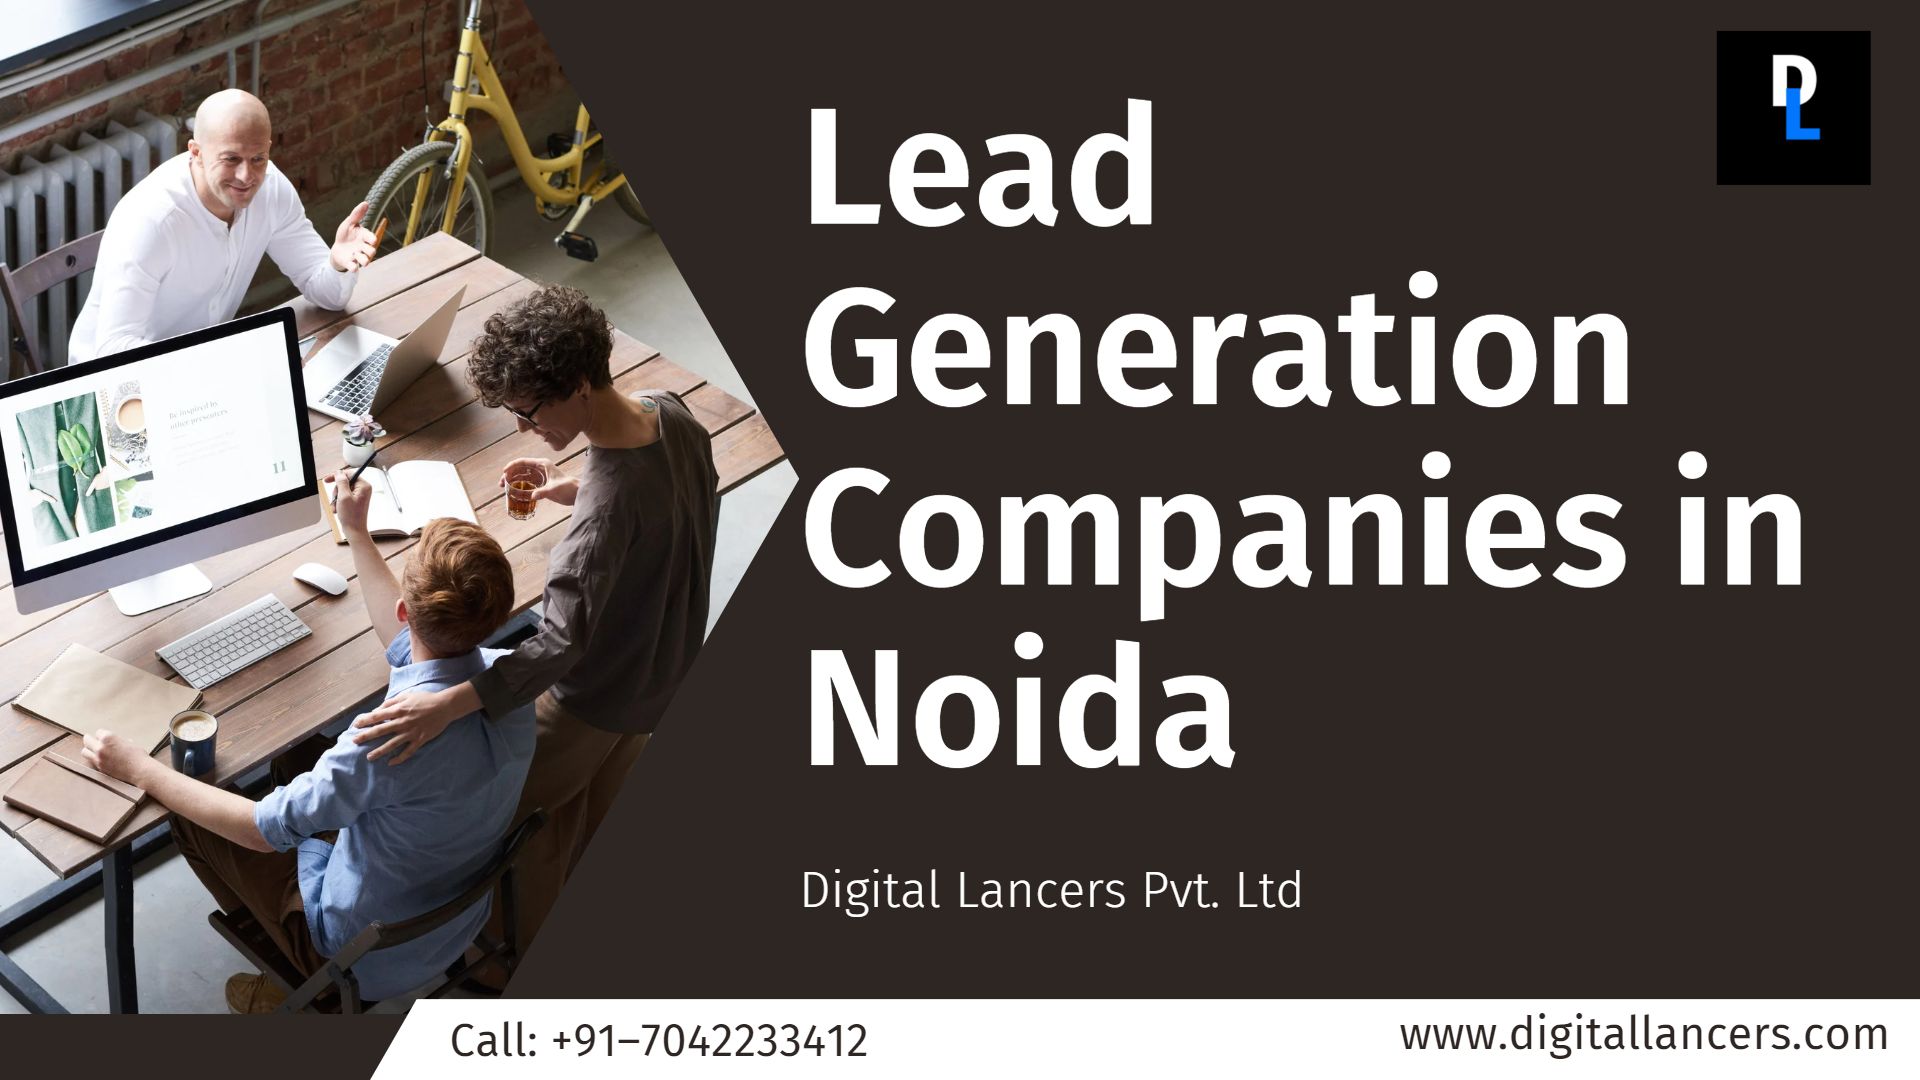 Lead Generation Companies in Noida